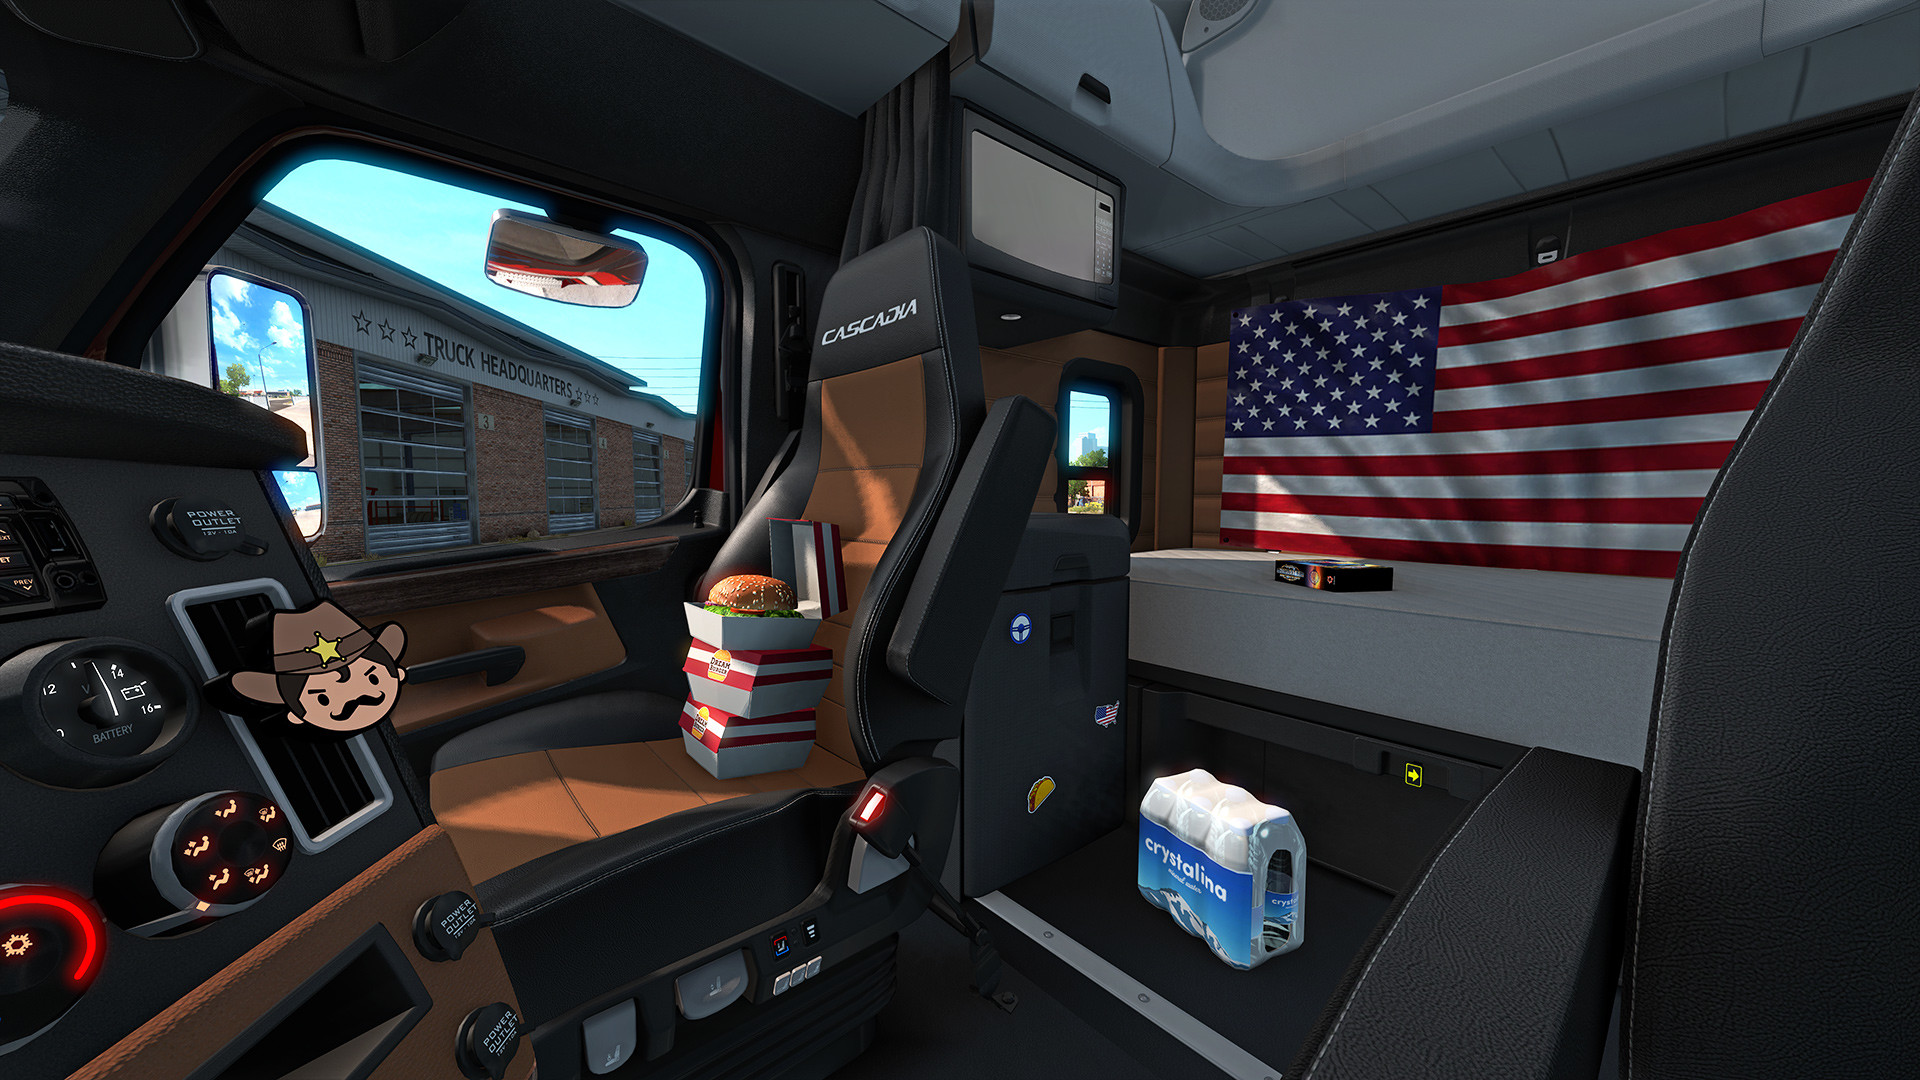 American Truck Simulator - Cabin Accessories DLC Steam CD Key 124.46 USD